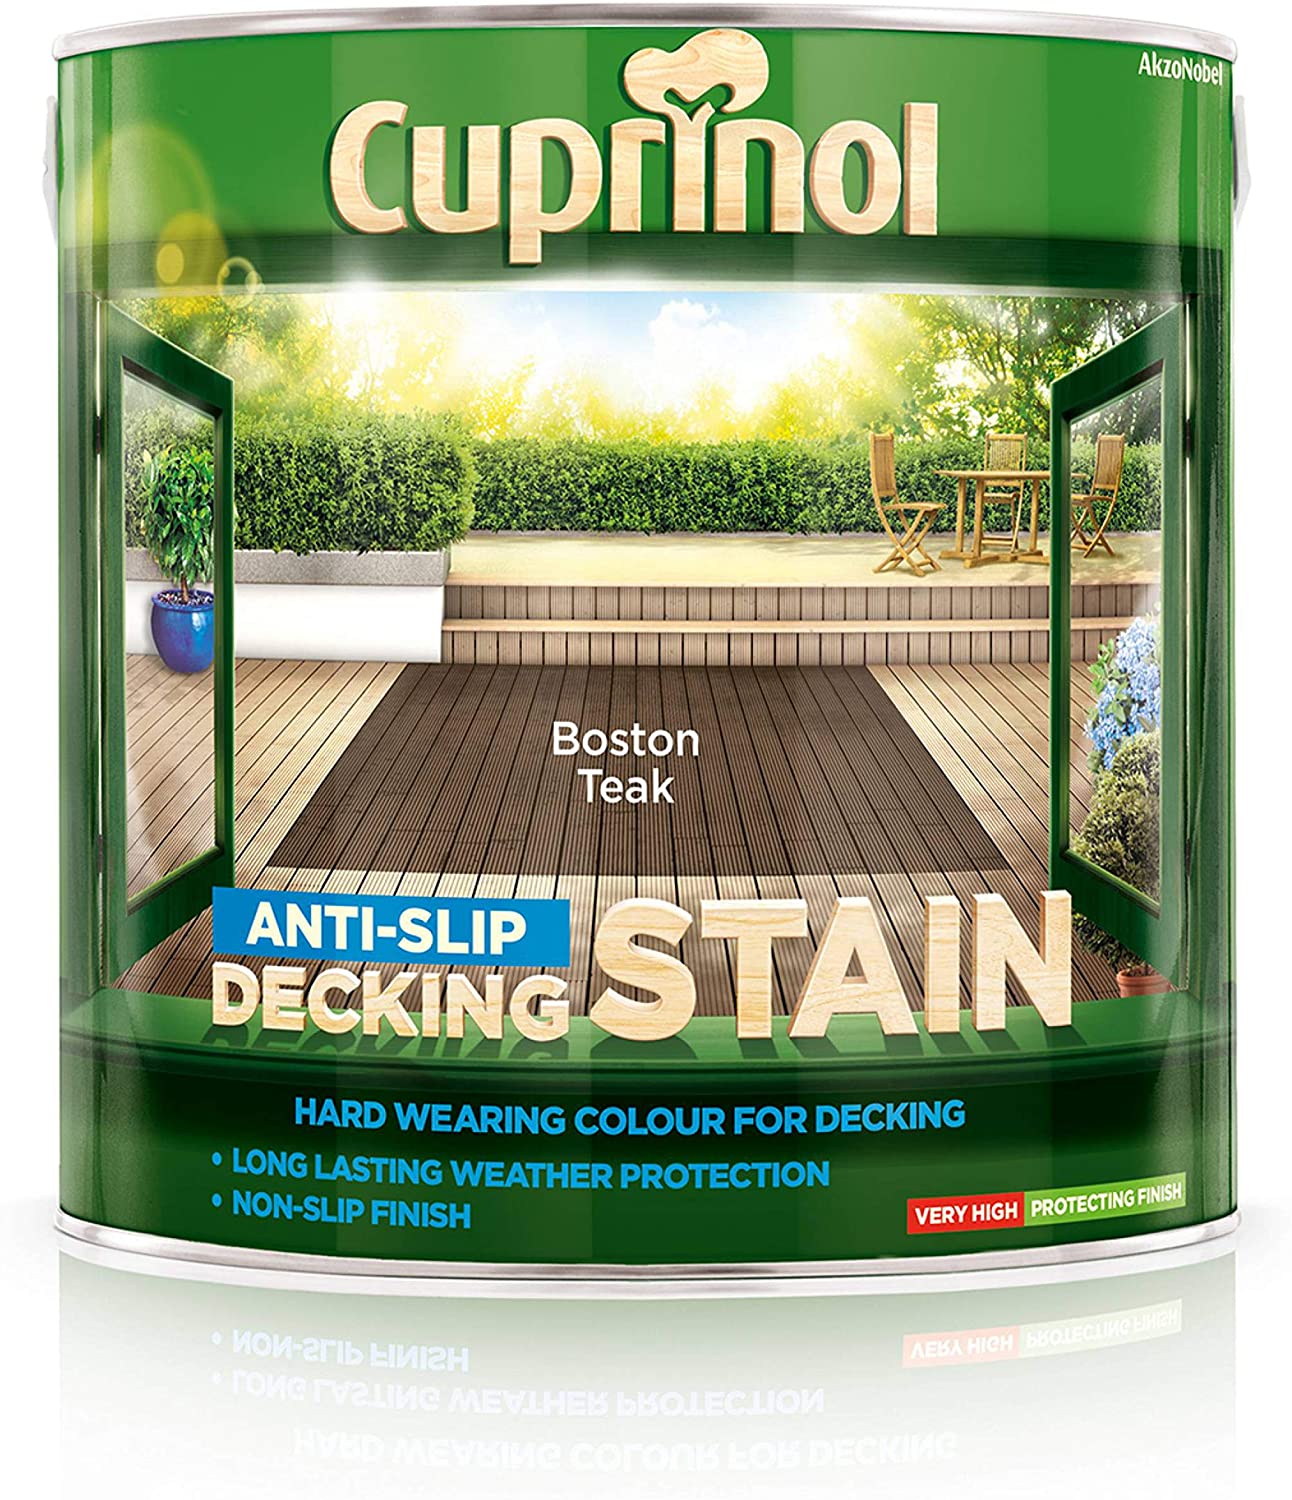 Cuprinol Anti Slip Decking Stain - Boston Teak 2.5L Garden & Diy Home Improvements Painting